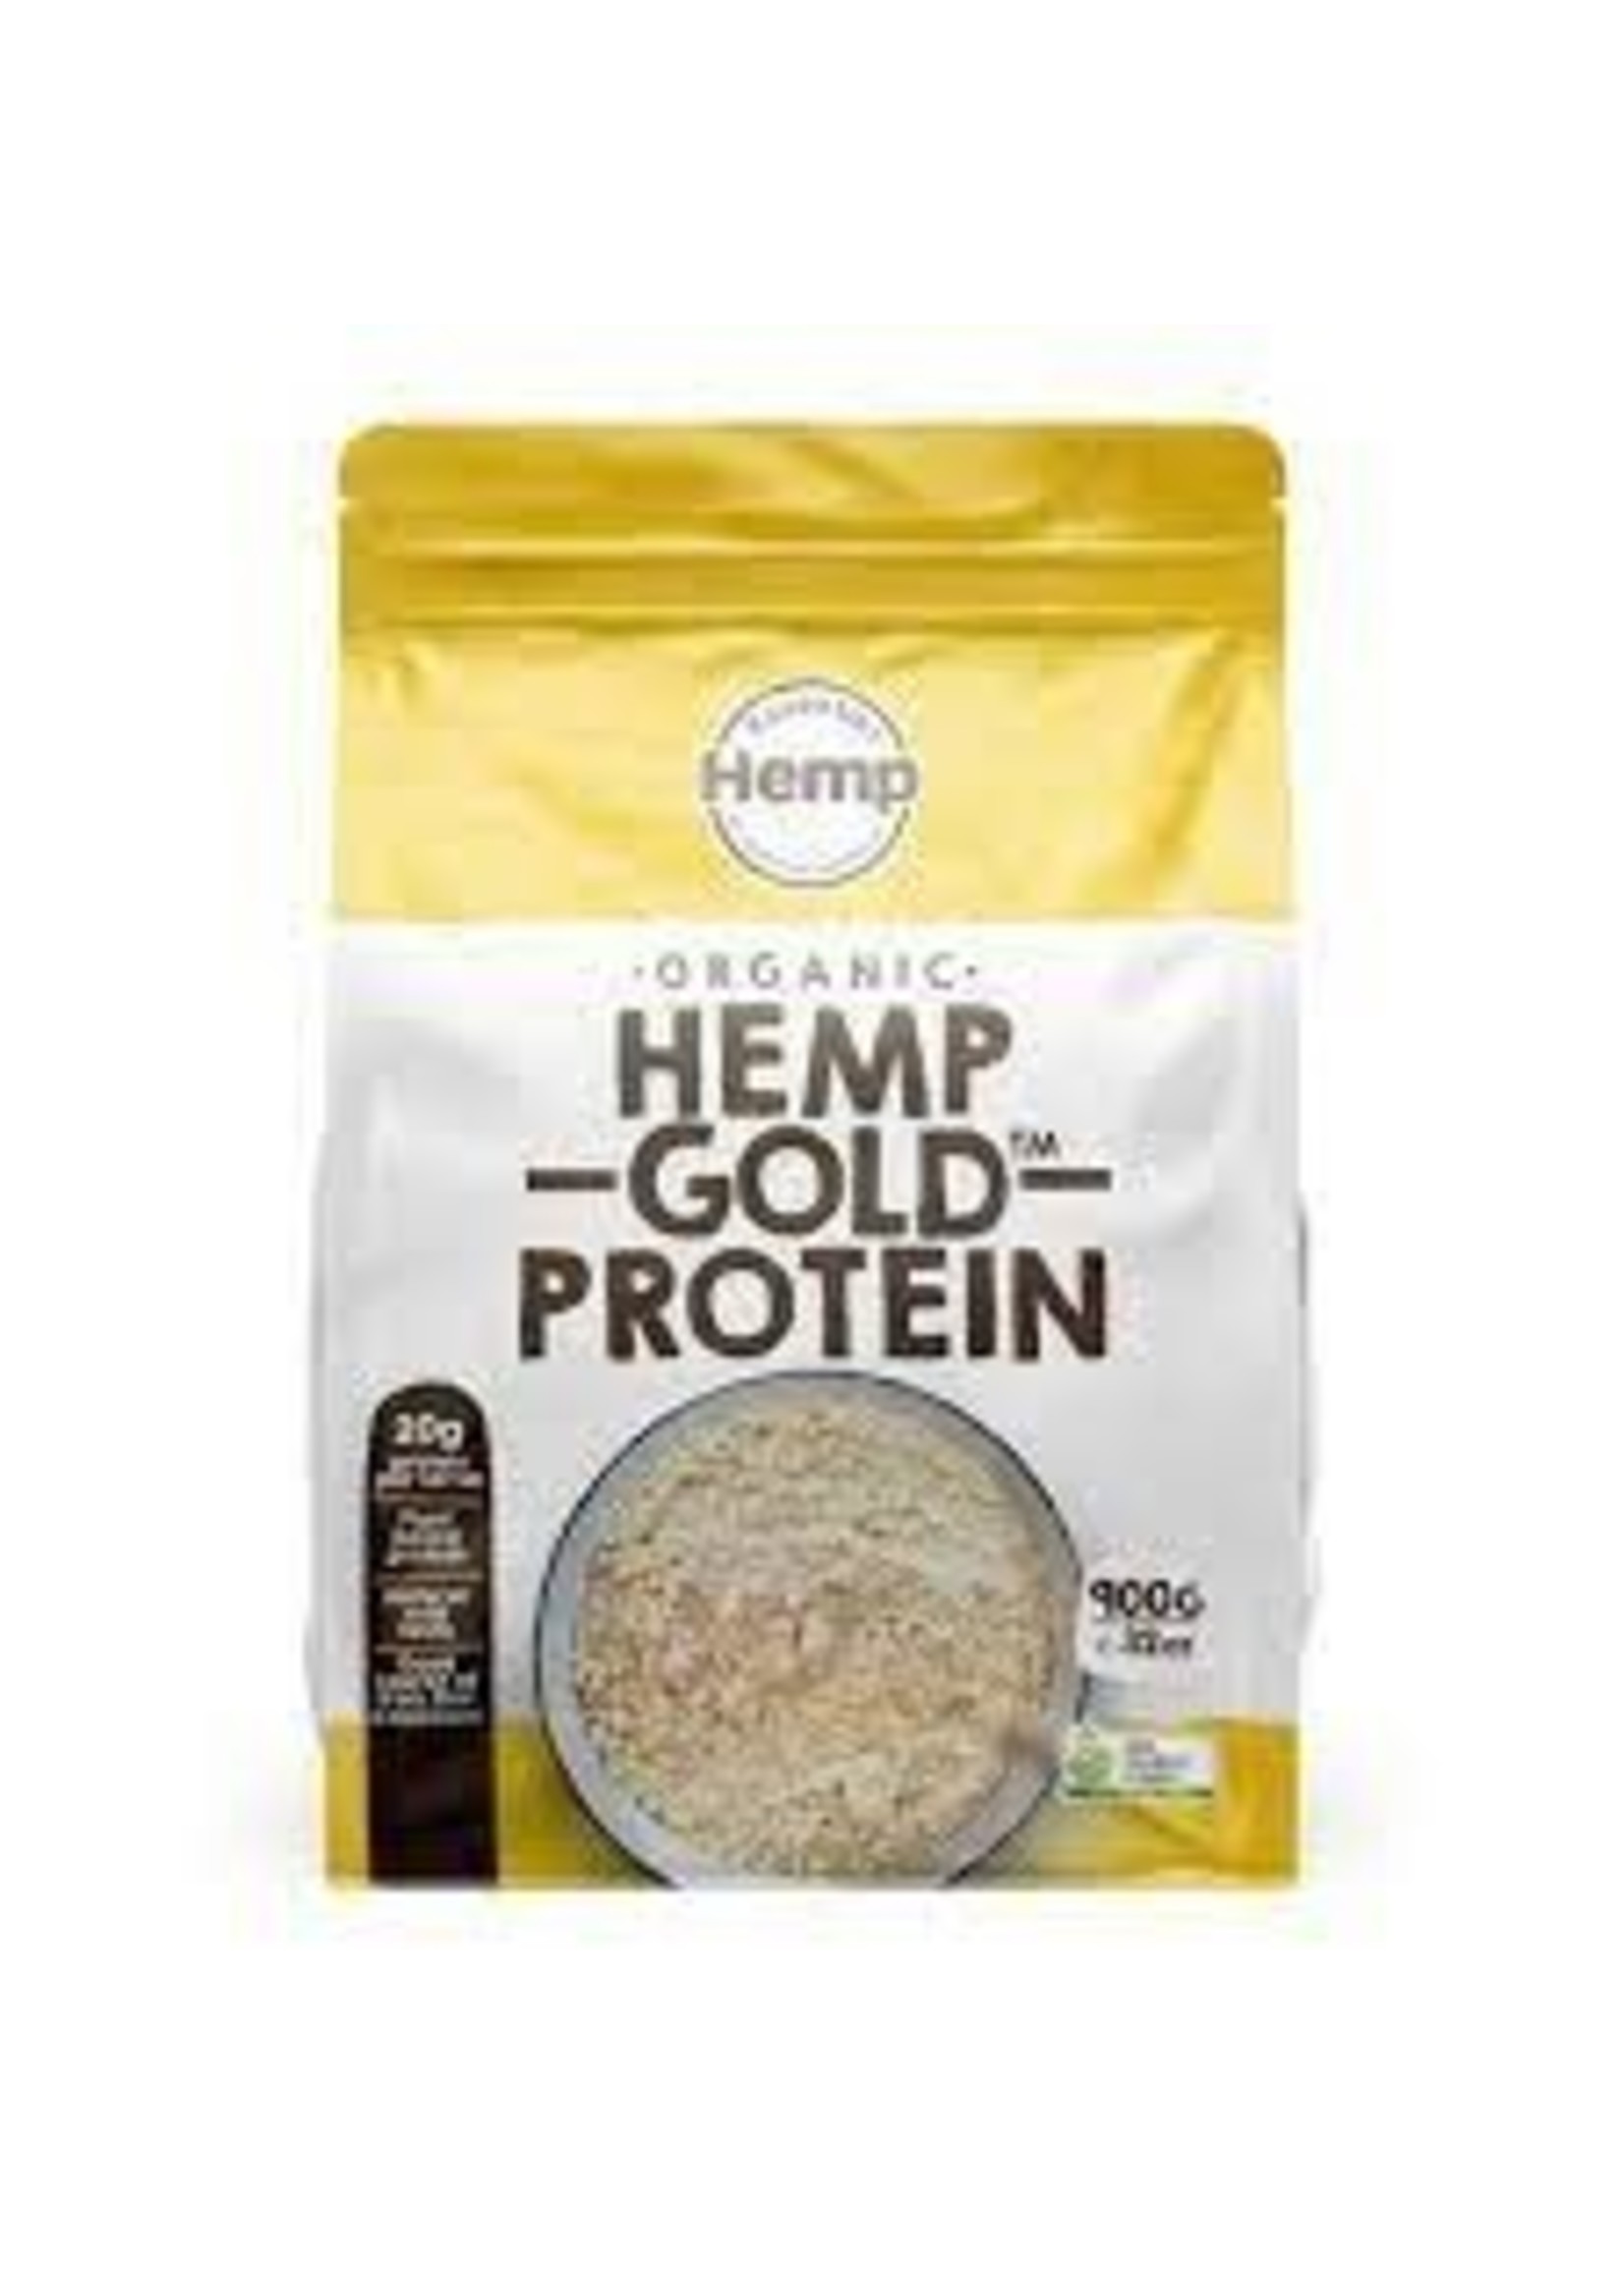 Hemp Foods Aust Essential Hemp Hemp Foods Austrtalia Hemp Protein 900g